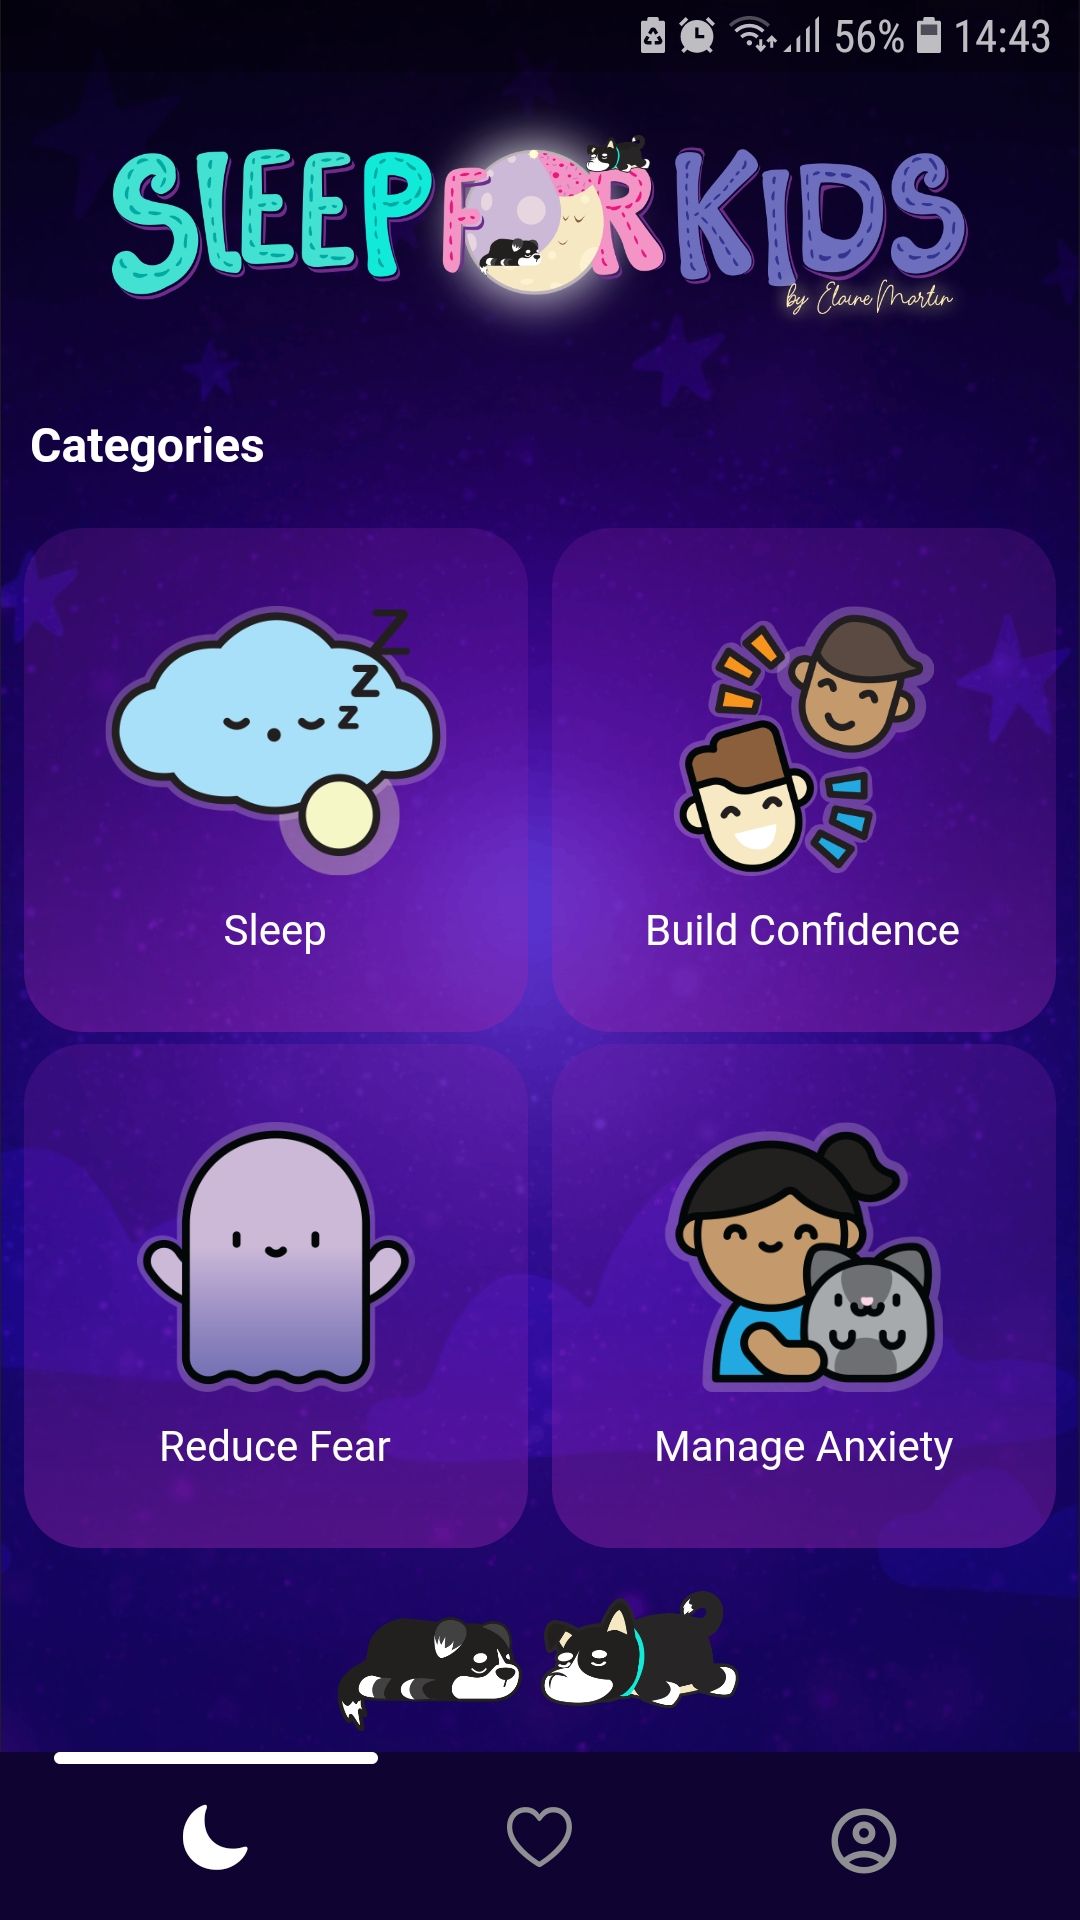 Sleep for kids mobile kids sleeping meditation app categories